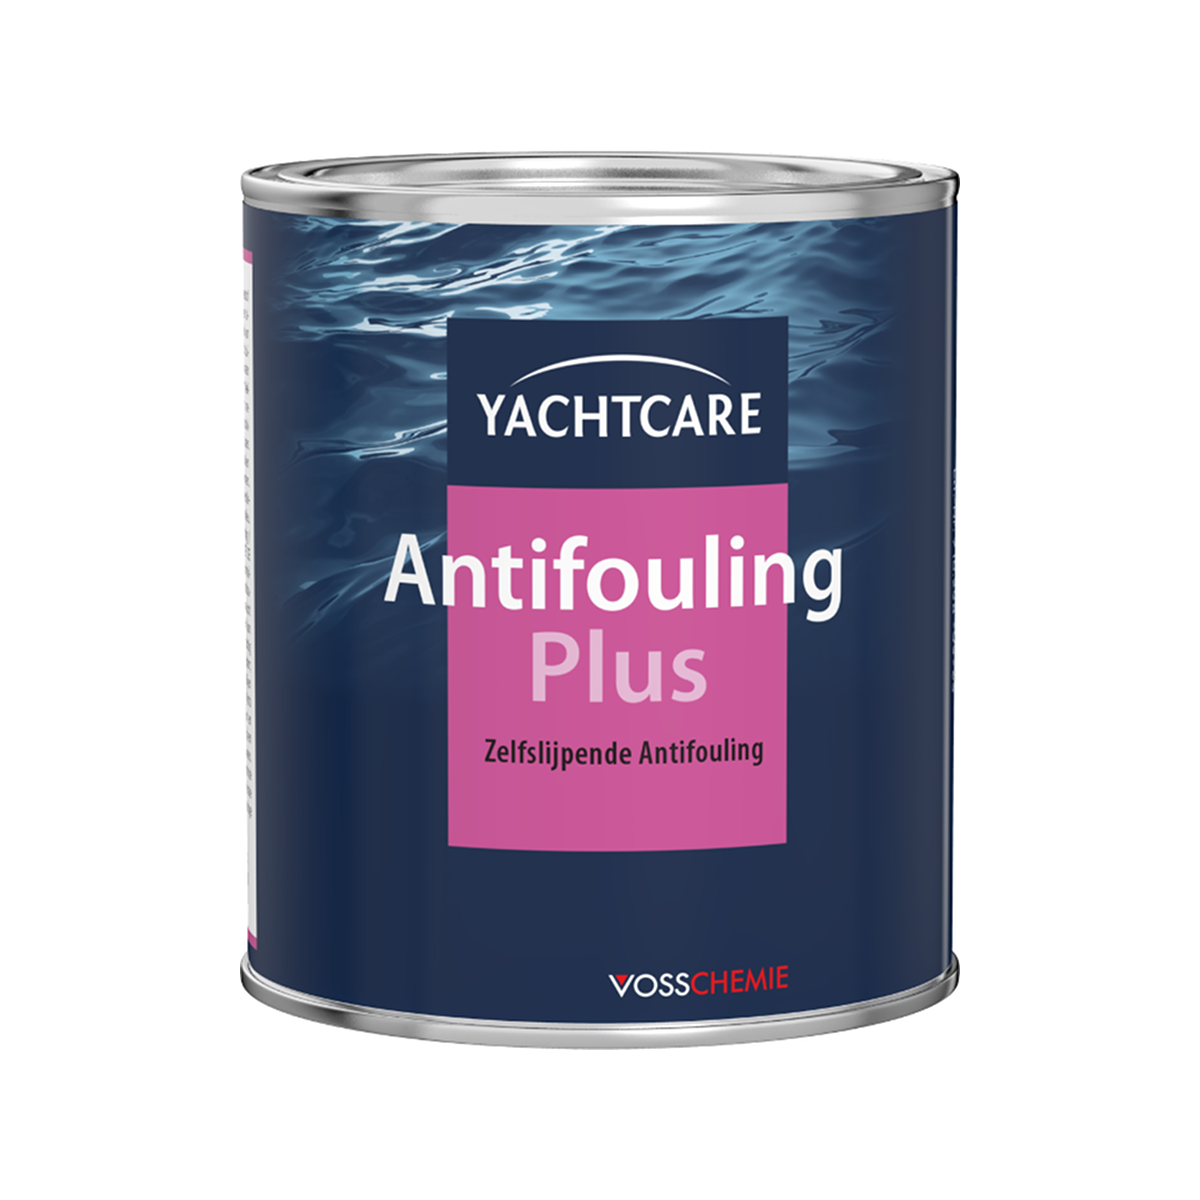 Yachtcare Plus Antifouling toegelaten in Nederland – rood, 750ml